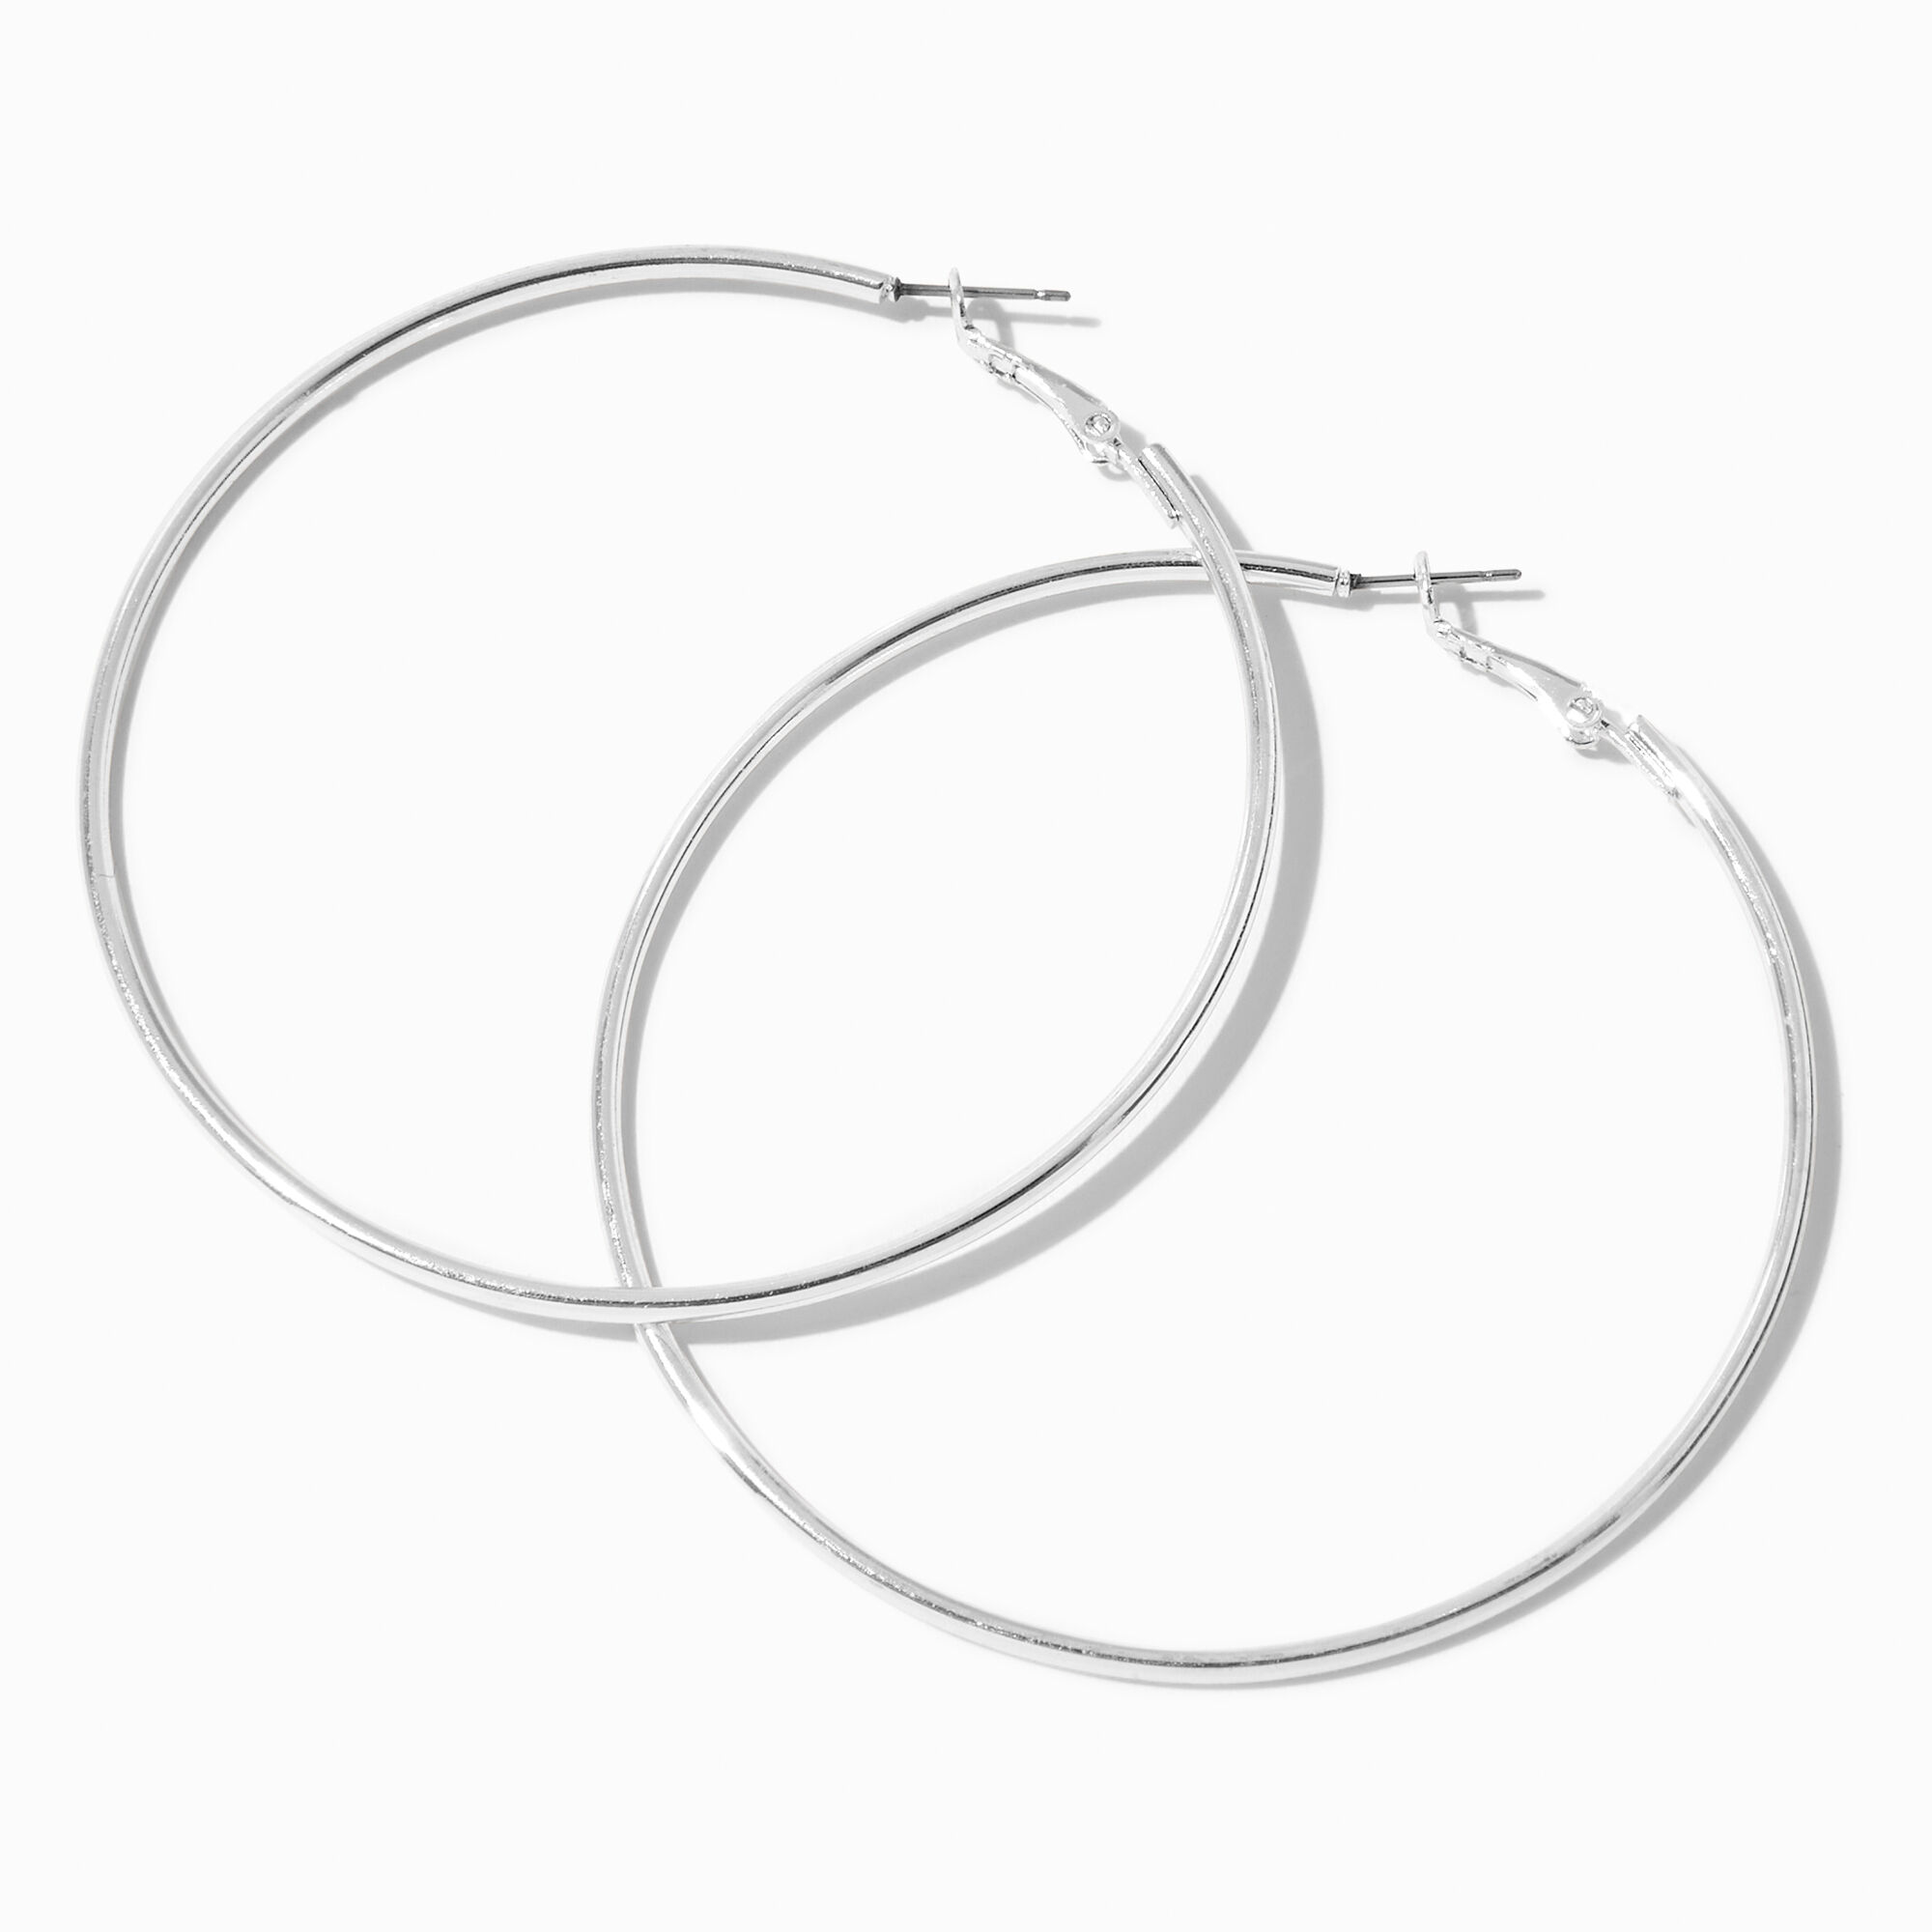 Silver 2mm by 70mm Hoop Earrings - Silver Jewellery Sales